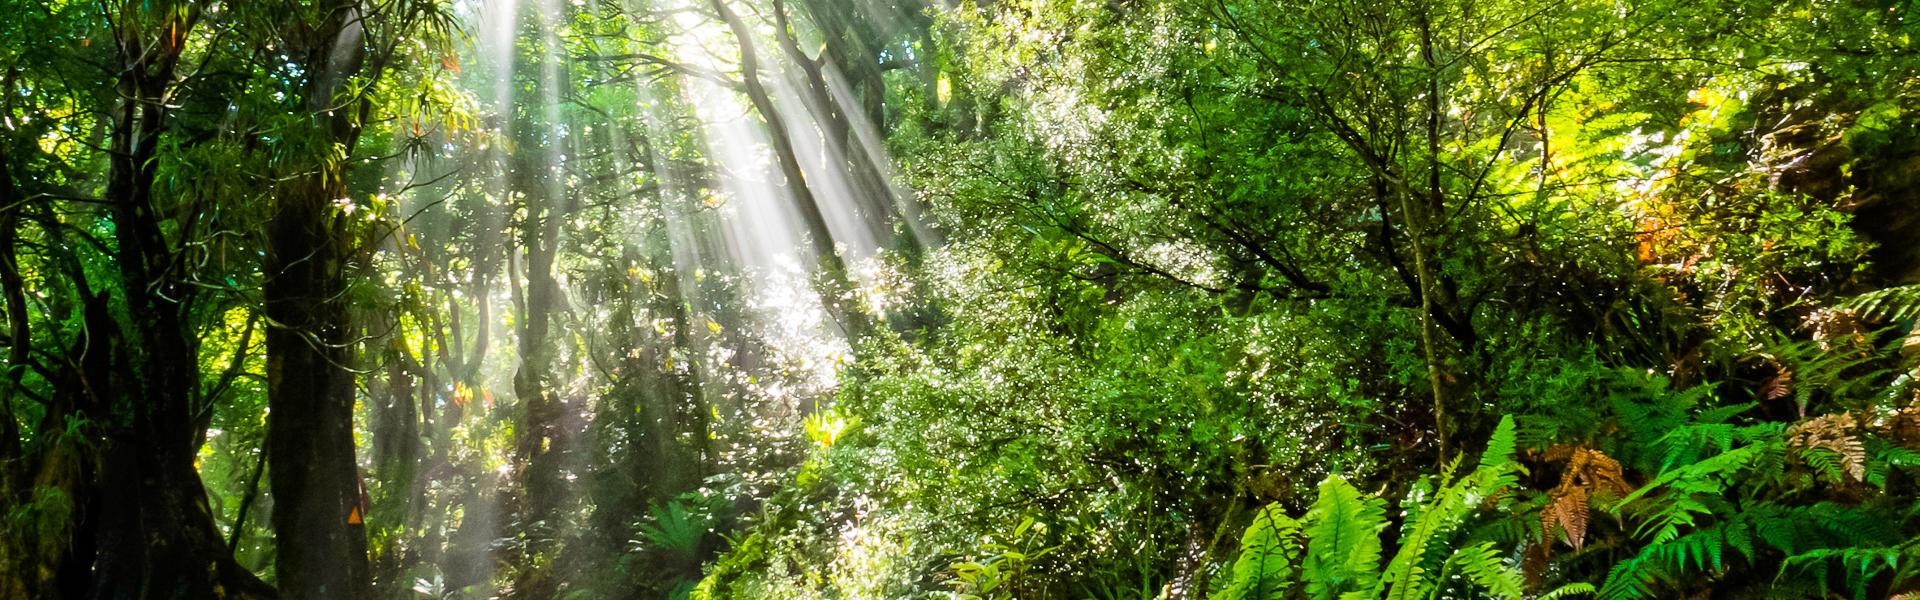 Sonnenstrahlen durchdringen den Regenwald |  Stephan Pietzko, iStockphoto.com / Chamleon